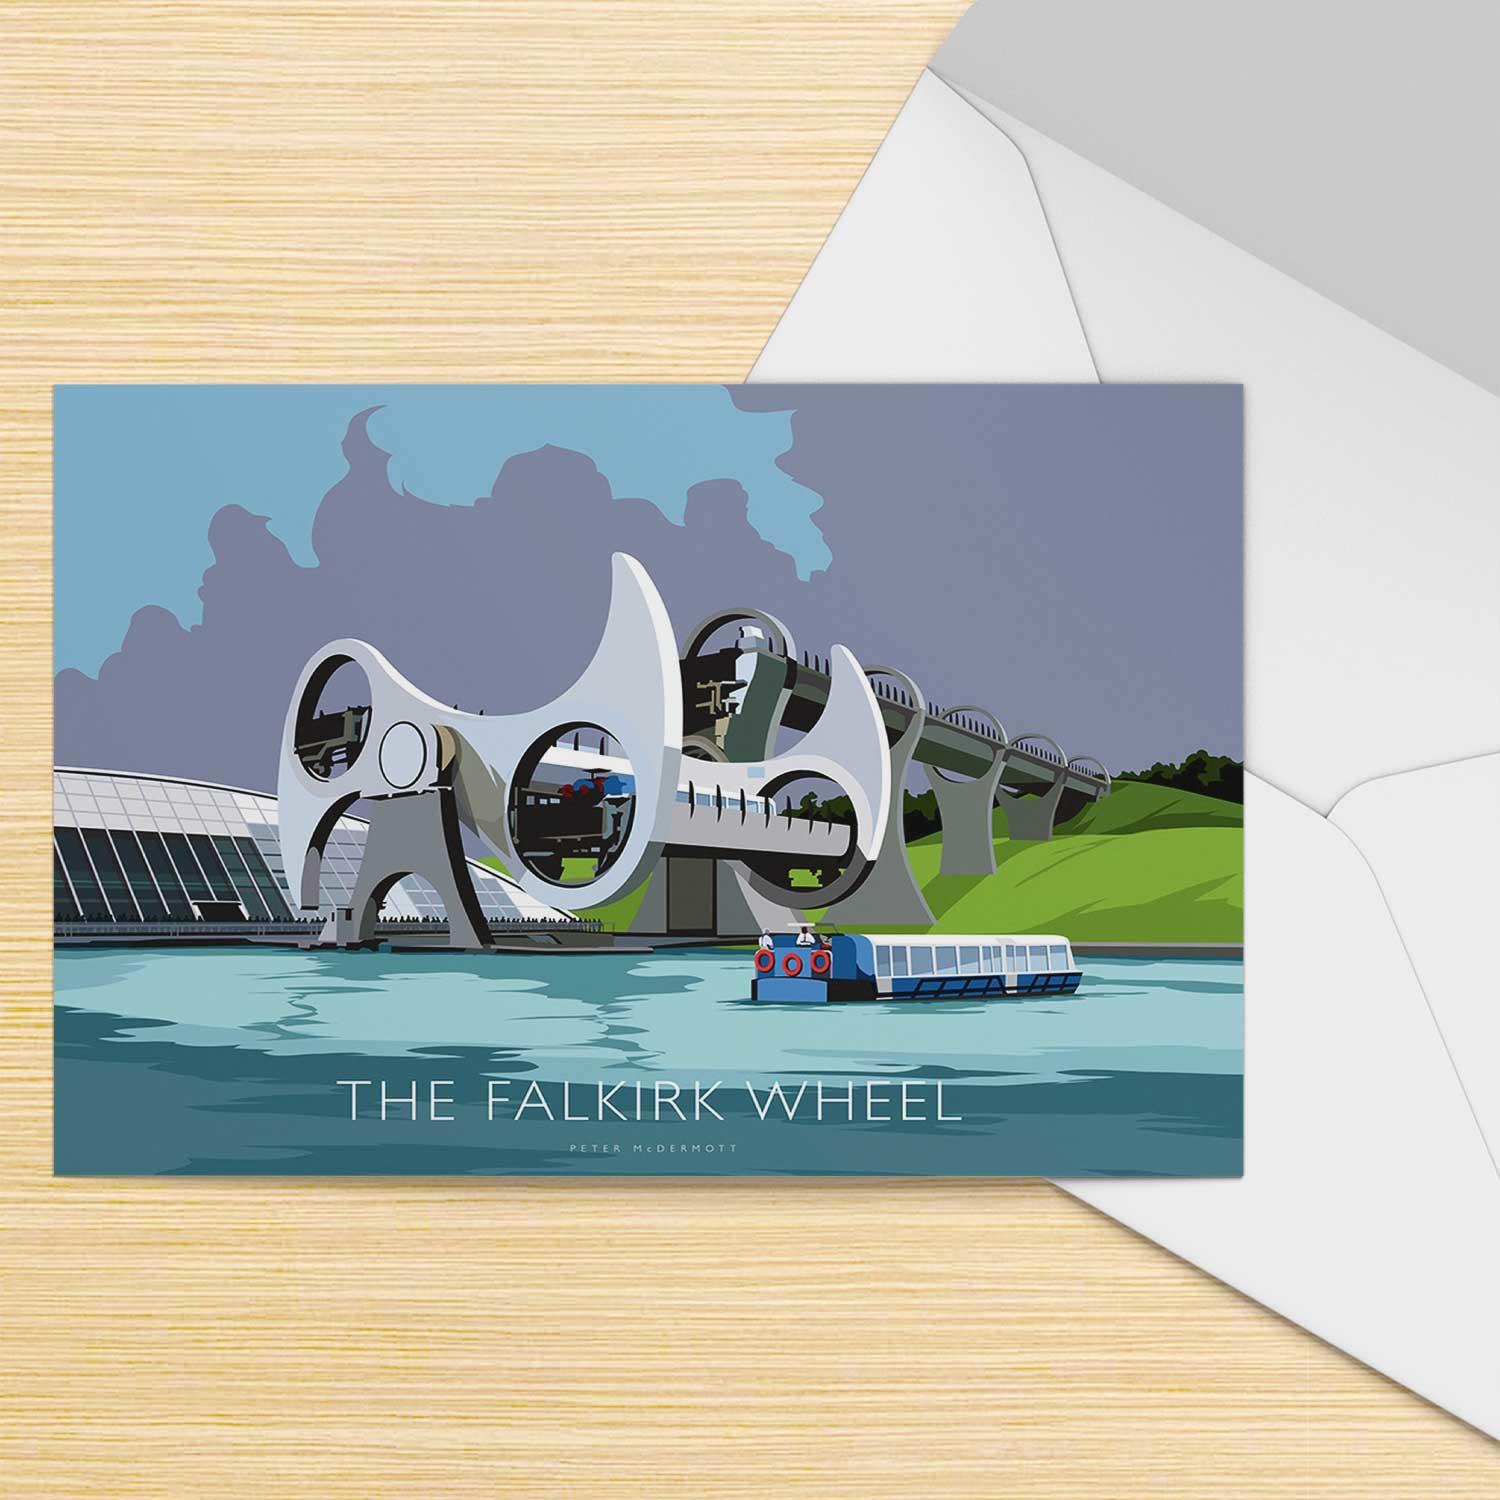 Falkirk Wheel Greeting Card from an original painting by artist Peter McDermott